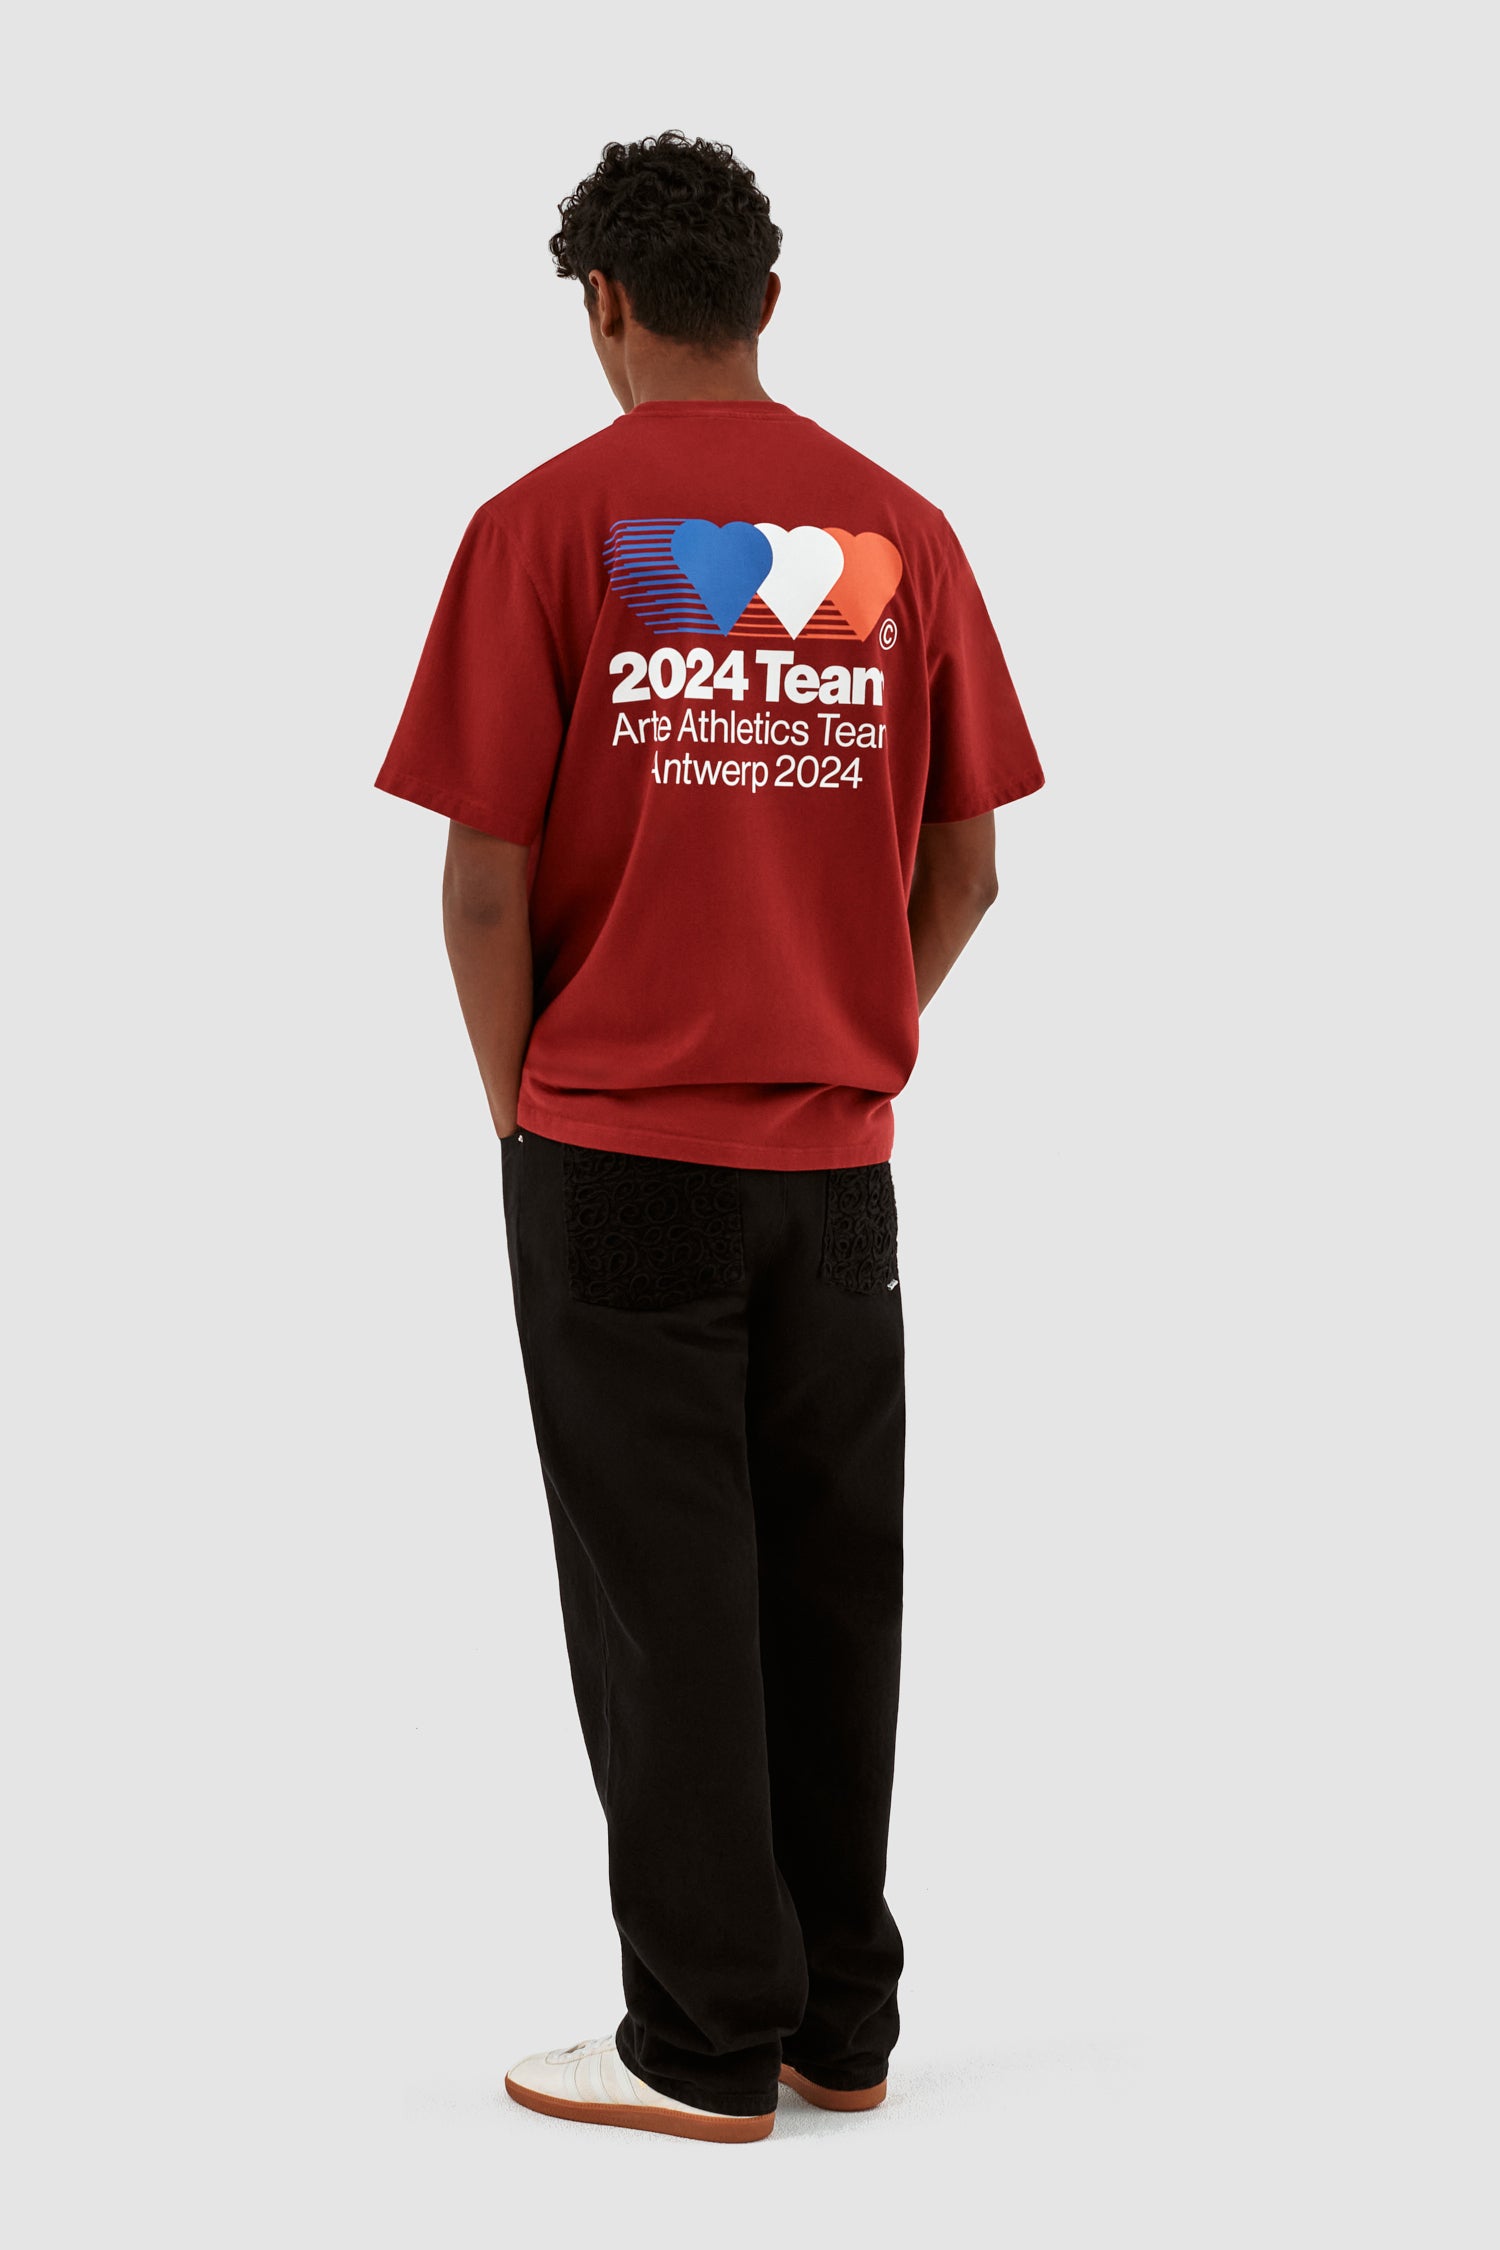 Teo Back Team T-shirt - Bordeaux